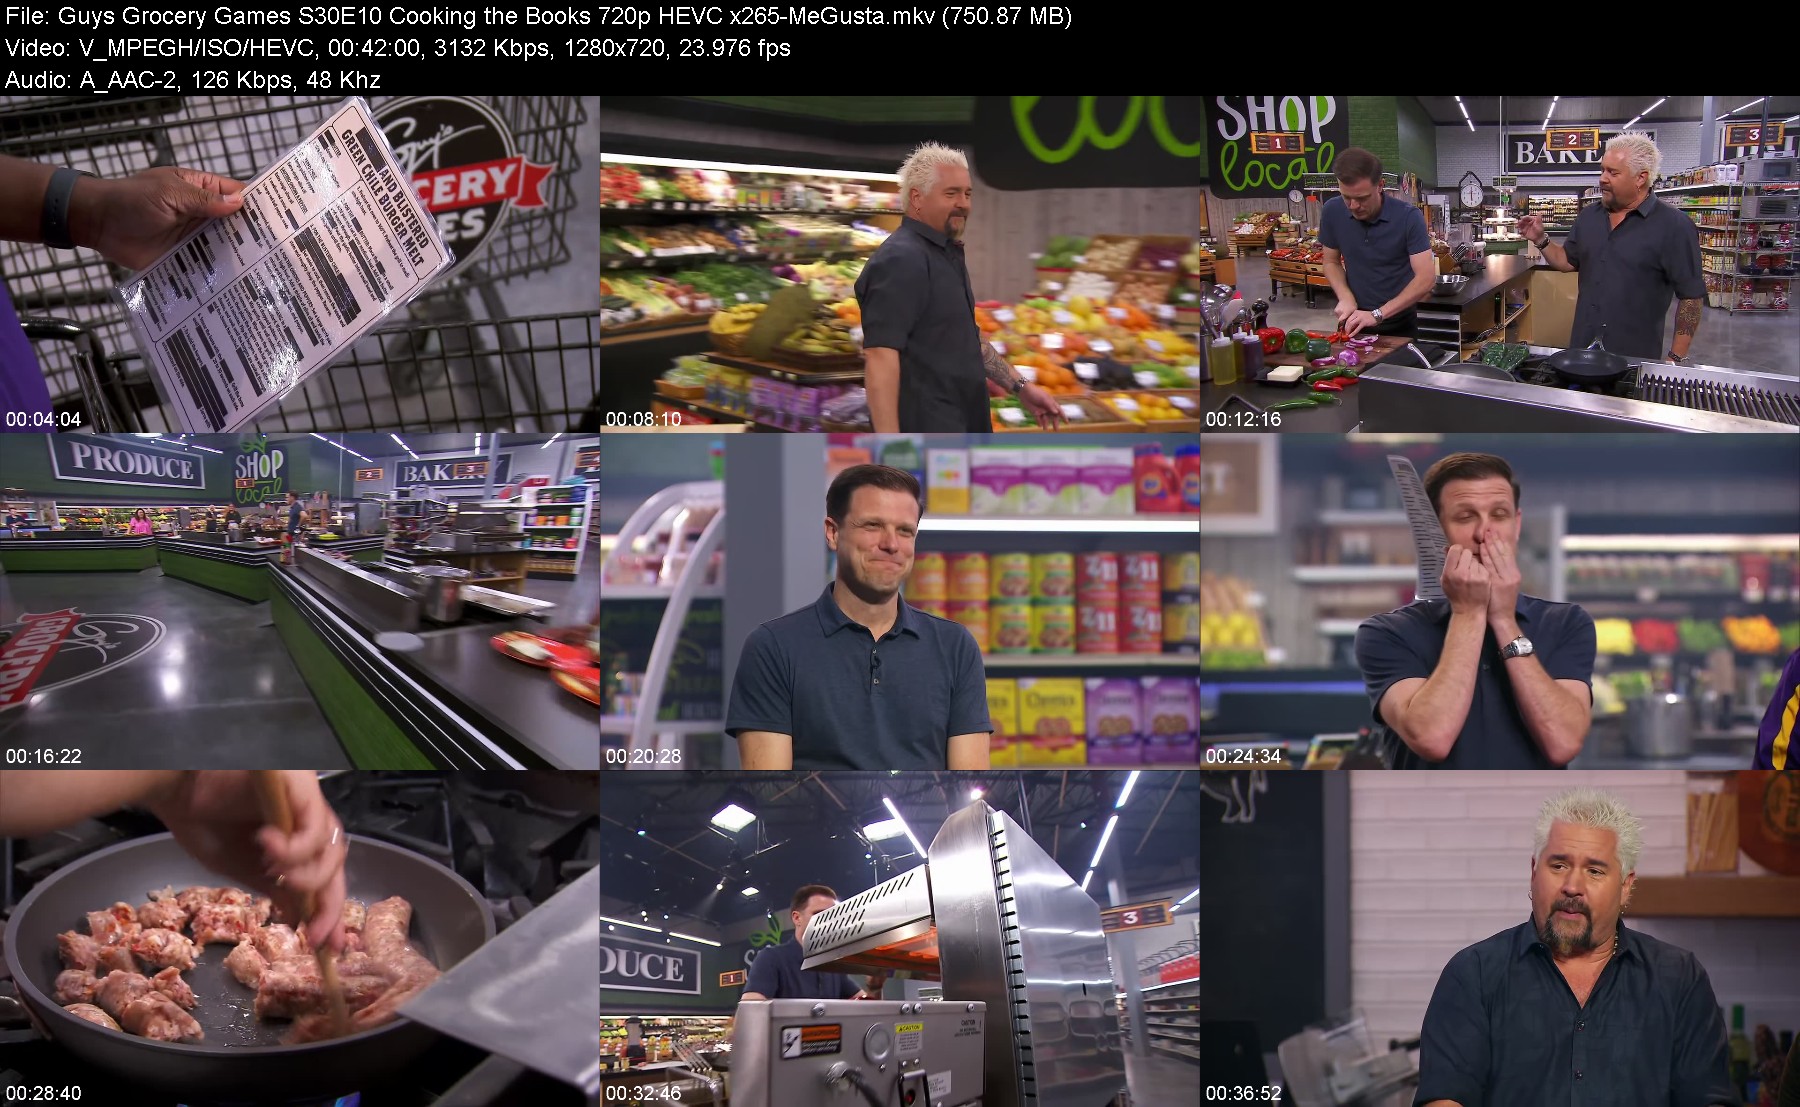 300815256_guys-grocery-games-s30e10-cooking-the-books-720p-hevc-x265-megusta.jpg